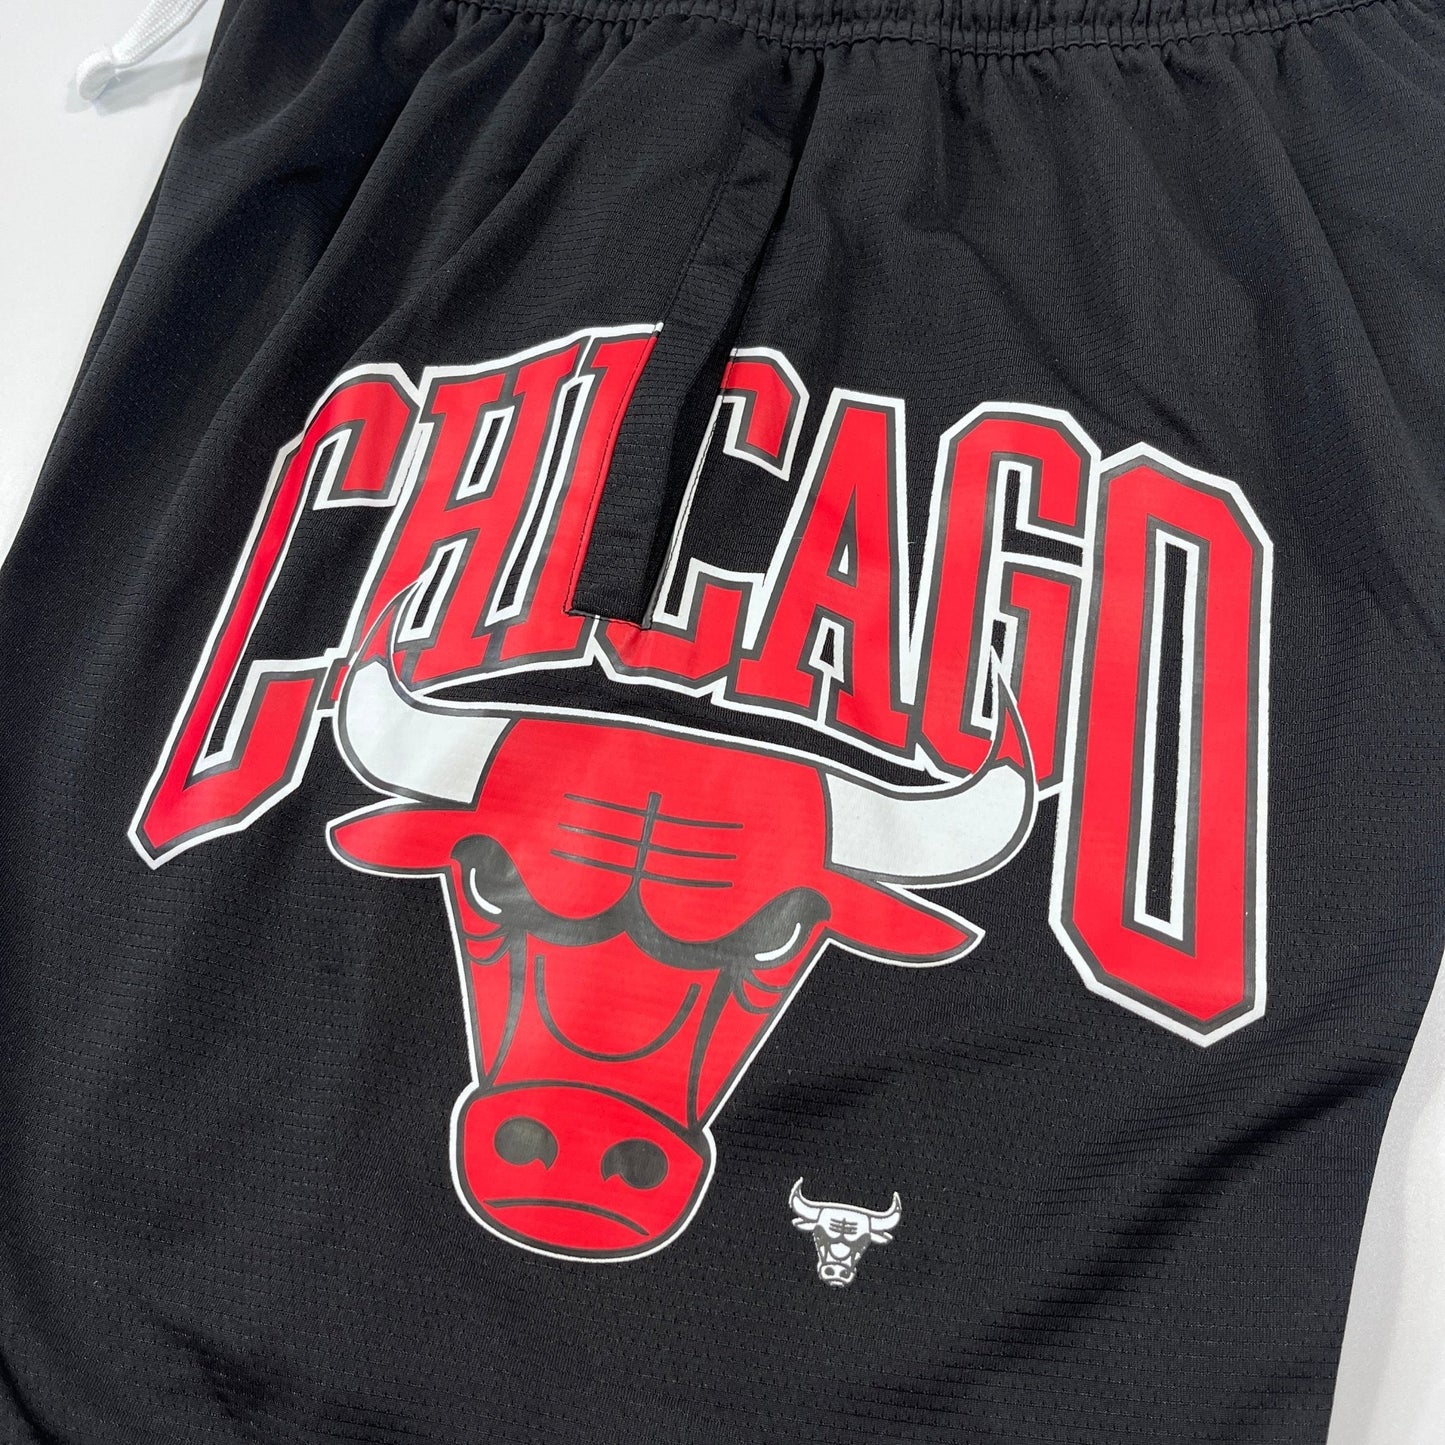 Shorts casual do Chicago Bulls preto